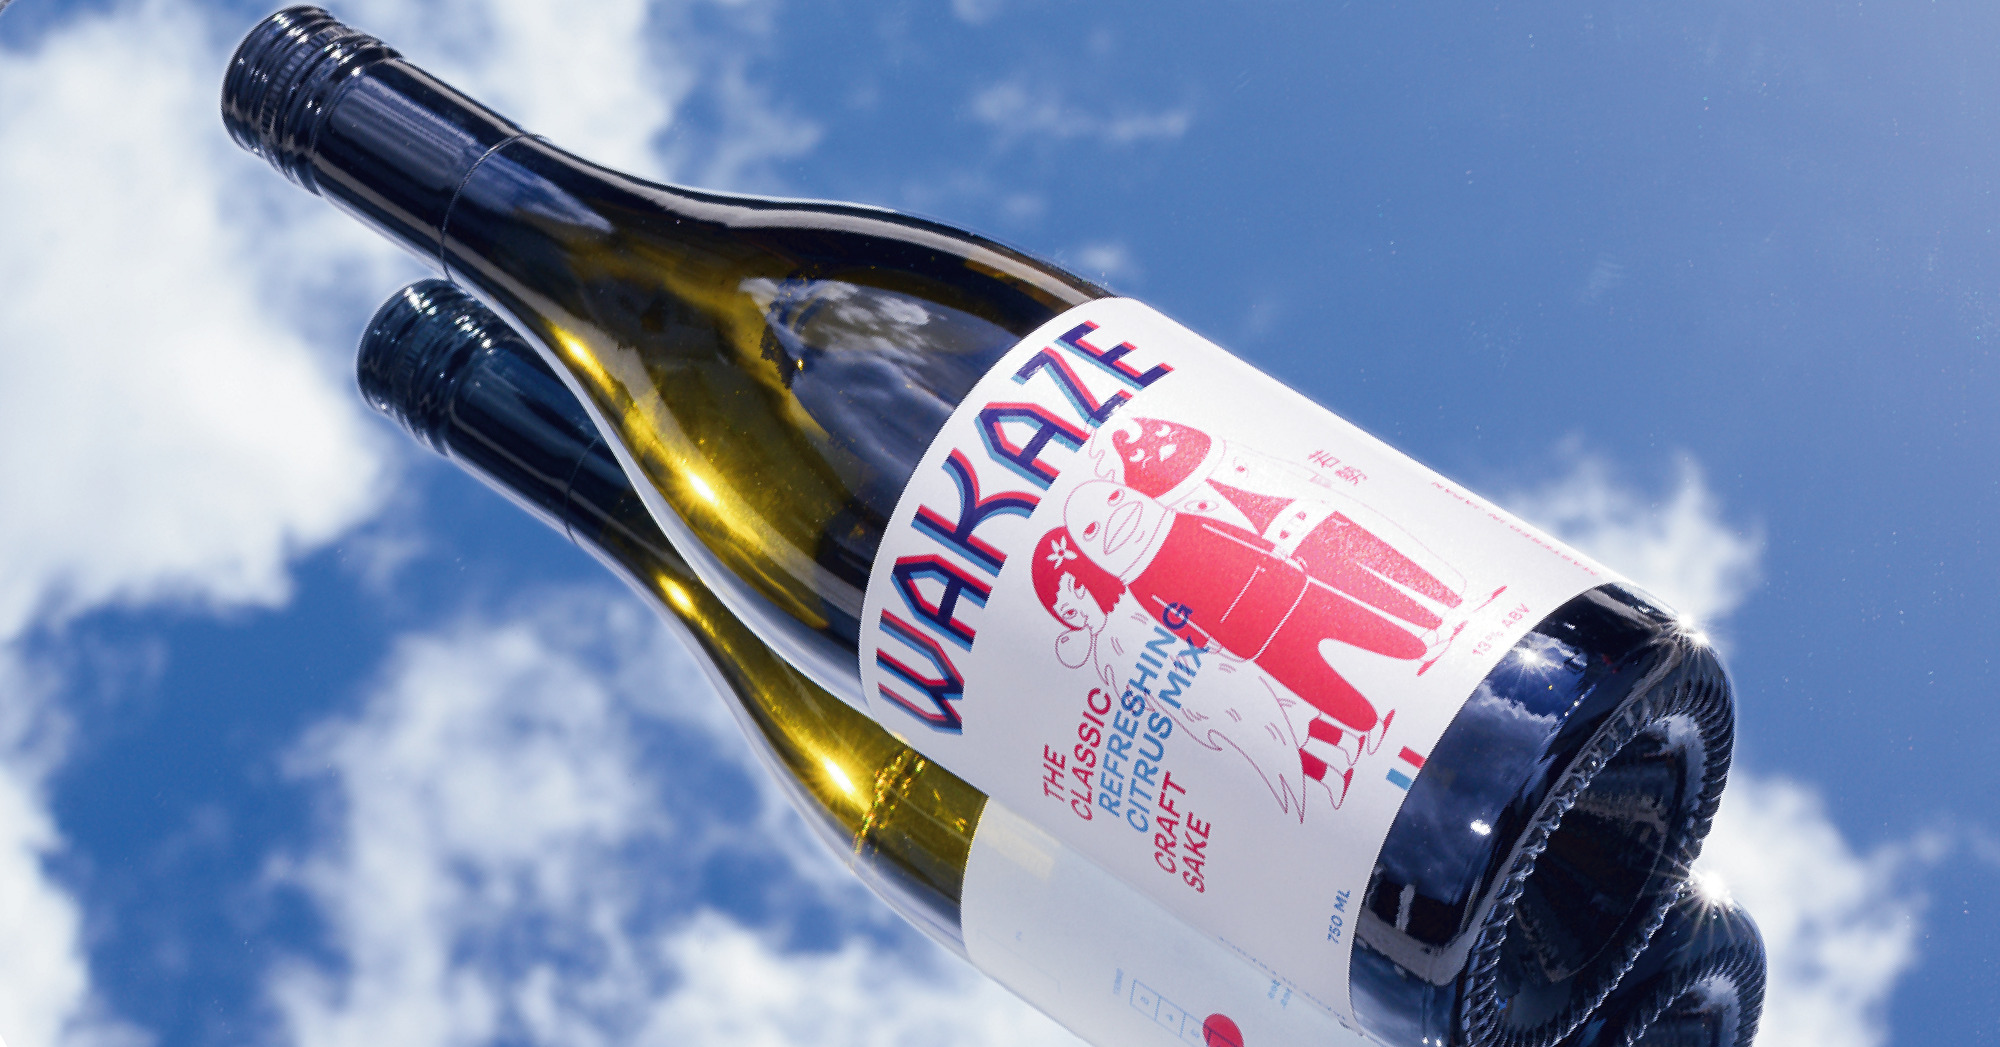 CraftSakeBreweryだからこその自由な酒造り「ホップのSake」WAKAZE×木花之醸造所×haccobaコラボレーションで6月25日発売開始